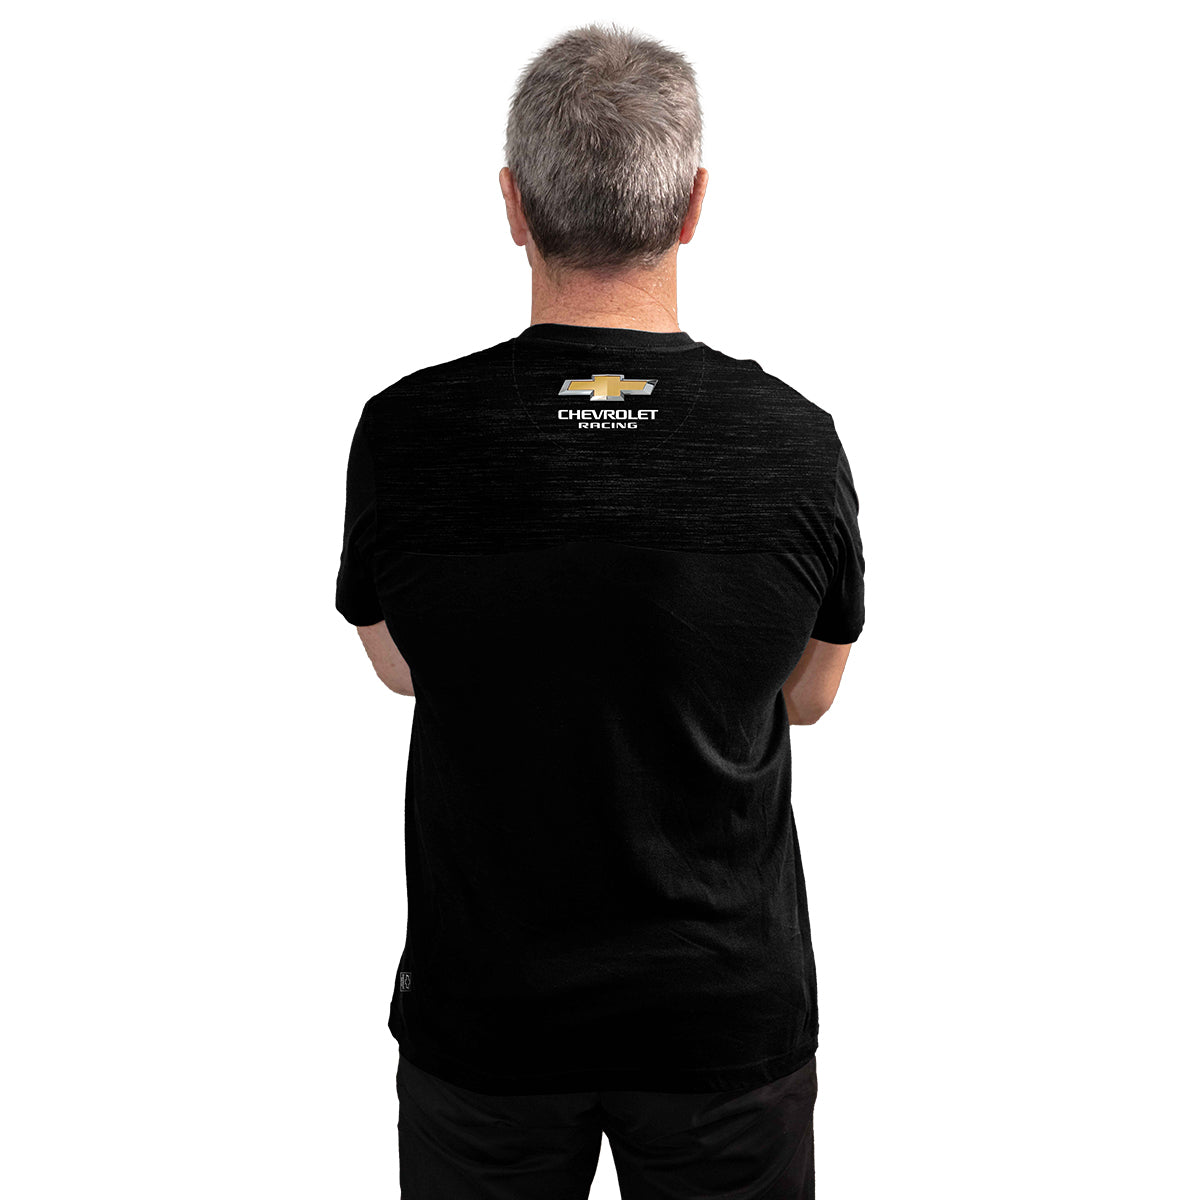 Chevrolet Racing Team T-Shirt